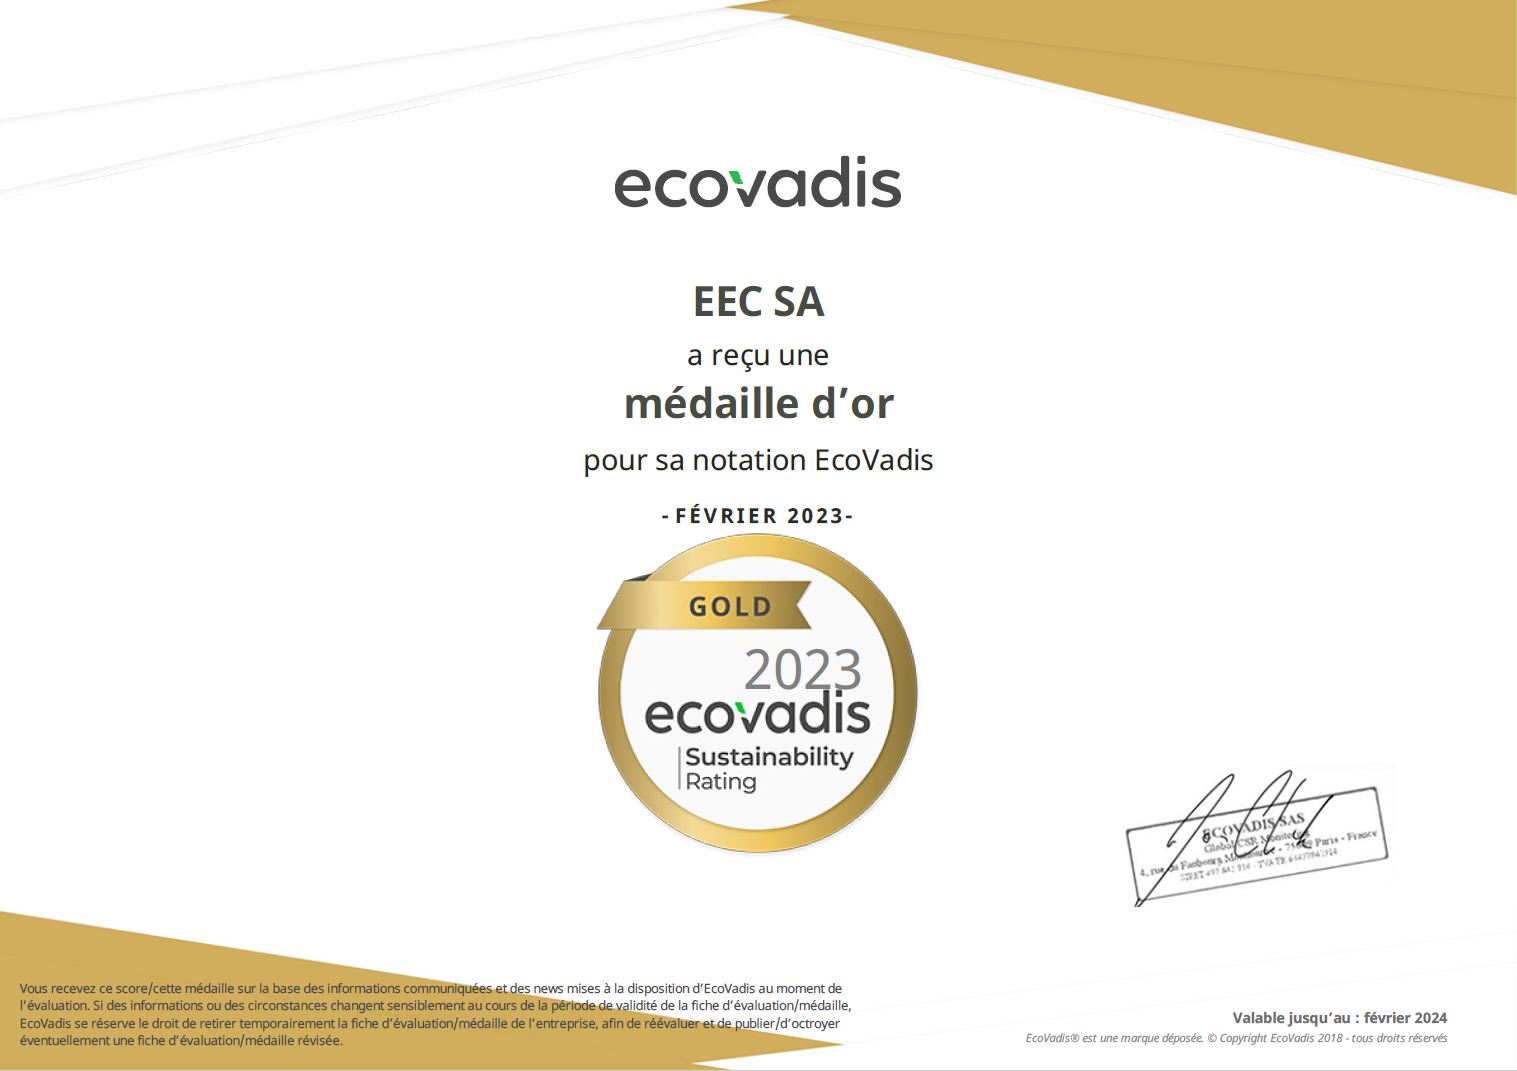 EEC SA EcoVadis Rating Certificate 2021 07 04 1